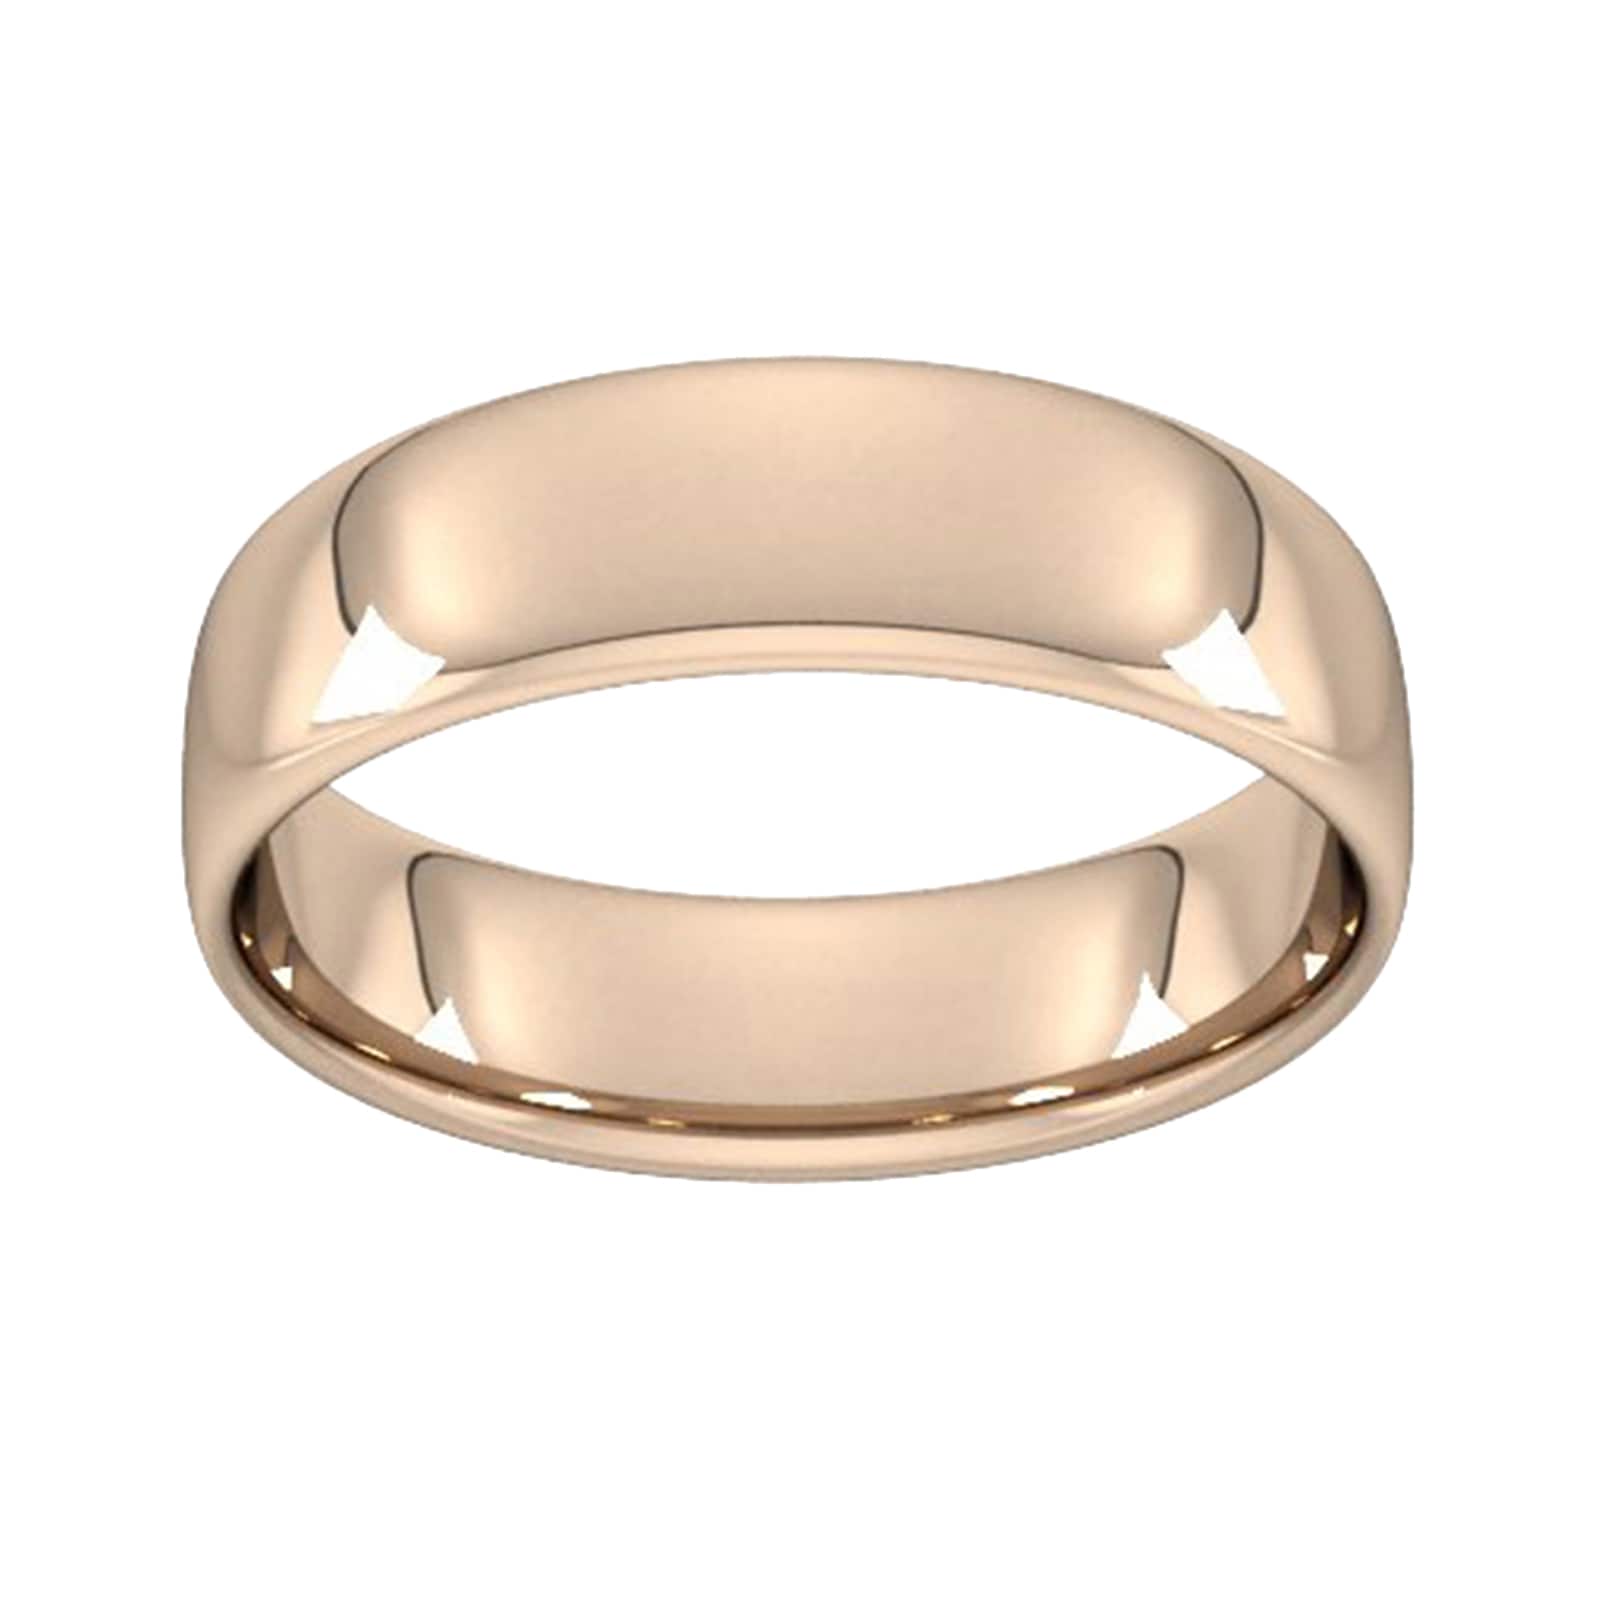 6mm Slight Court Standard Wedding Ring In 9 Carat Rose Gold - Ring Size Q